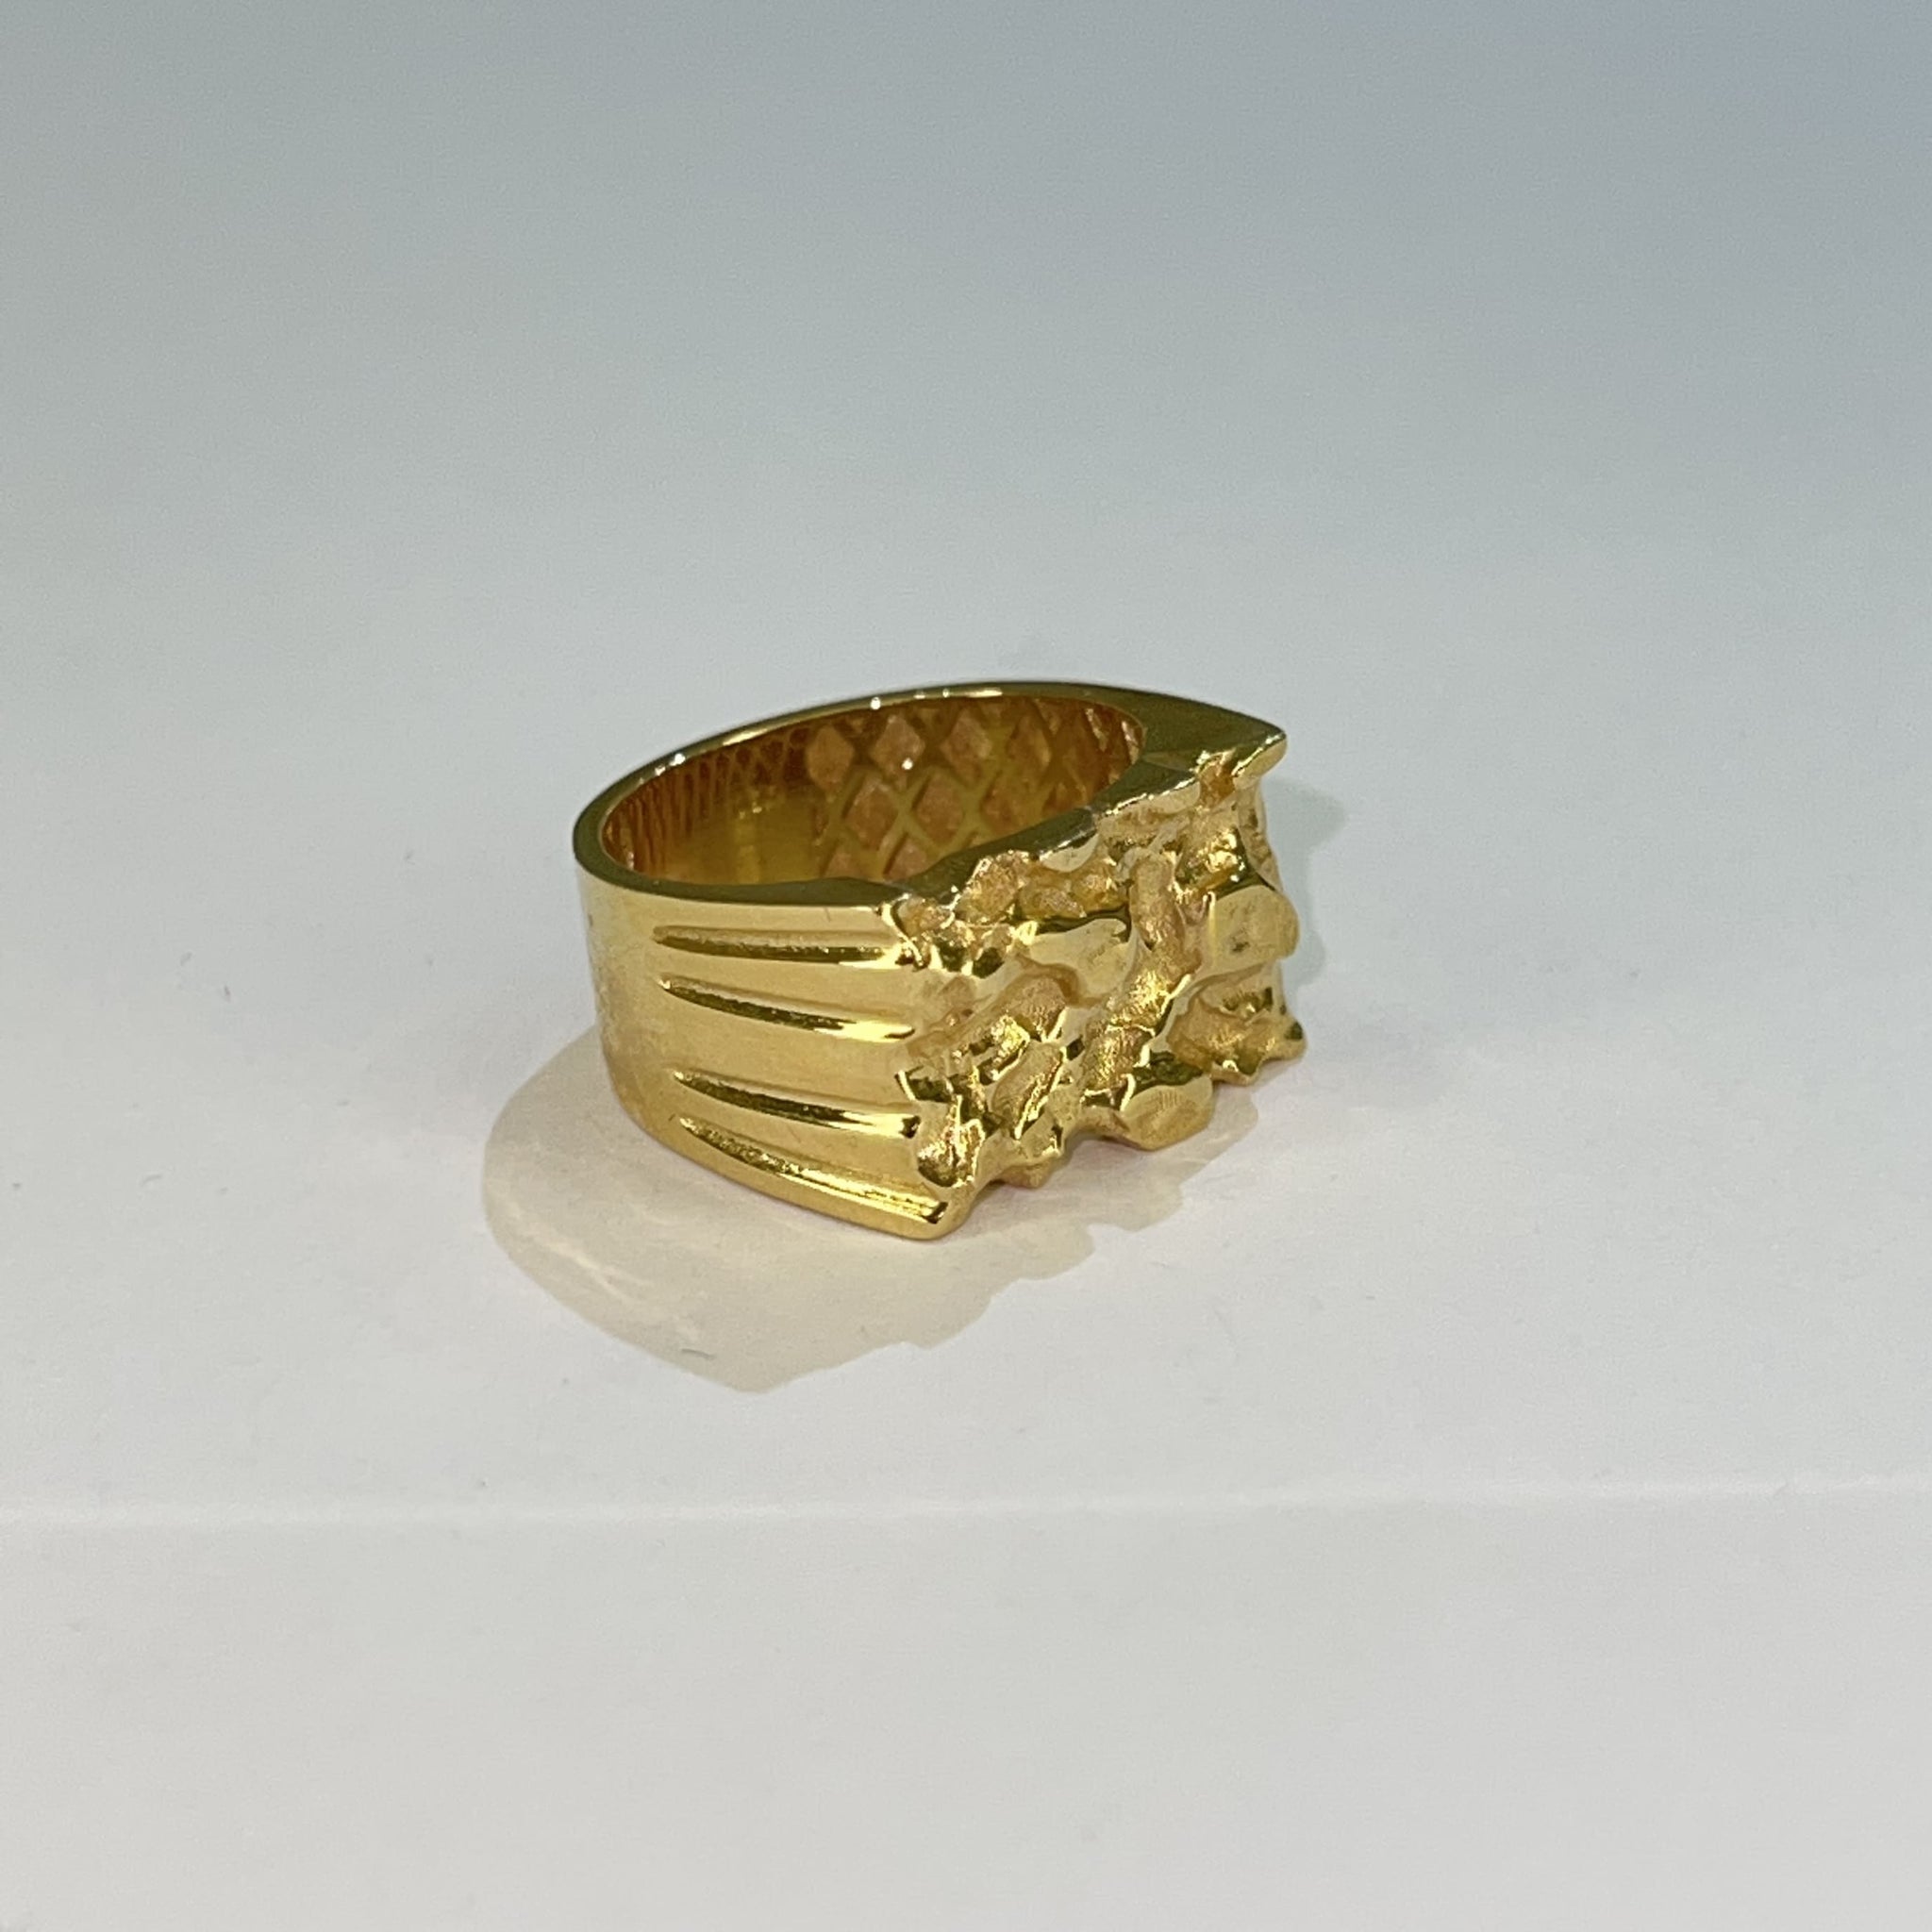 Piet Piet Ring - Hollow Model - 18 carat gold